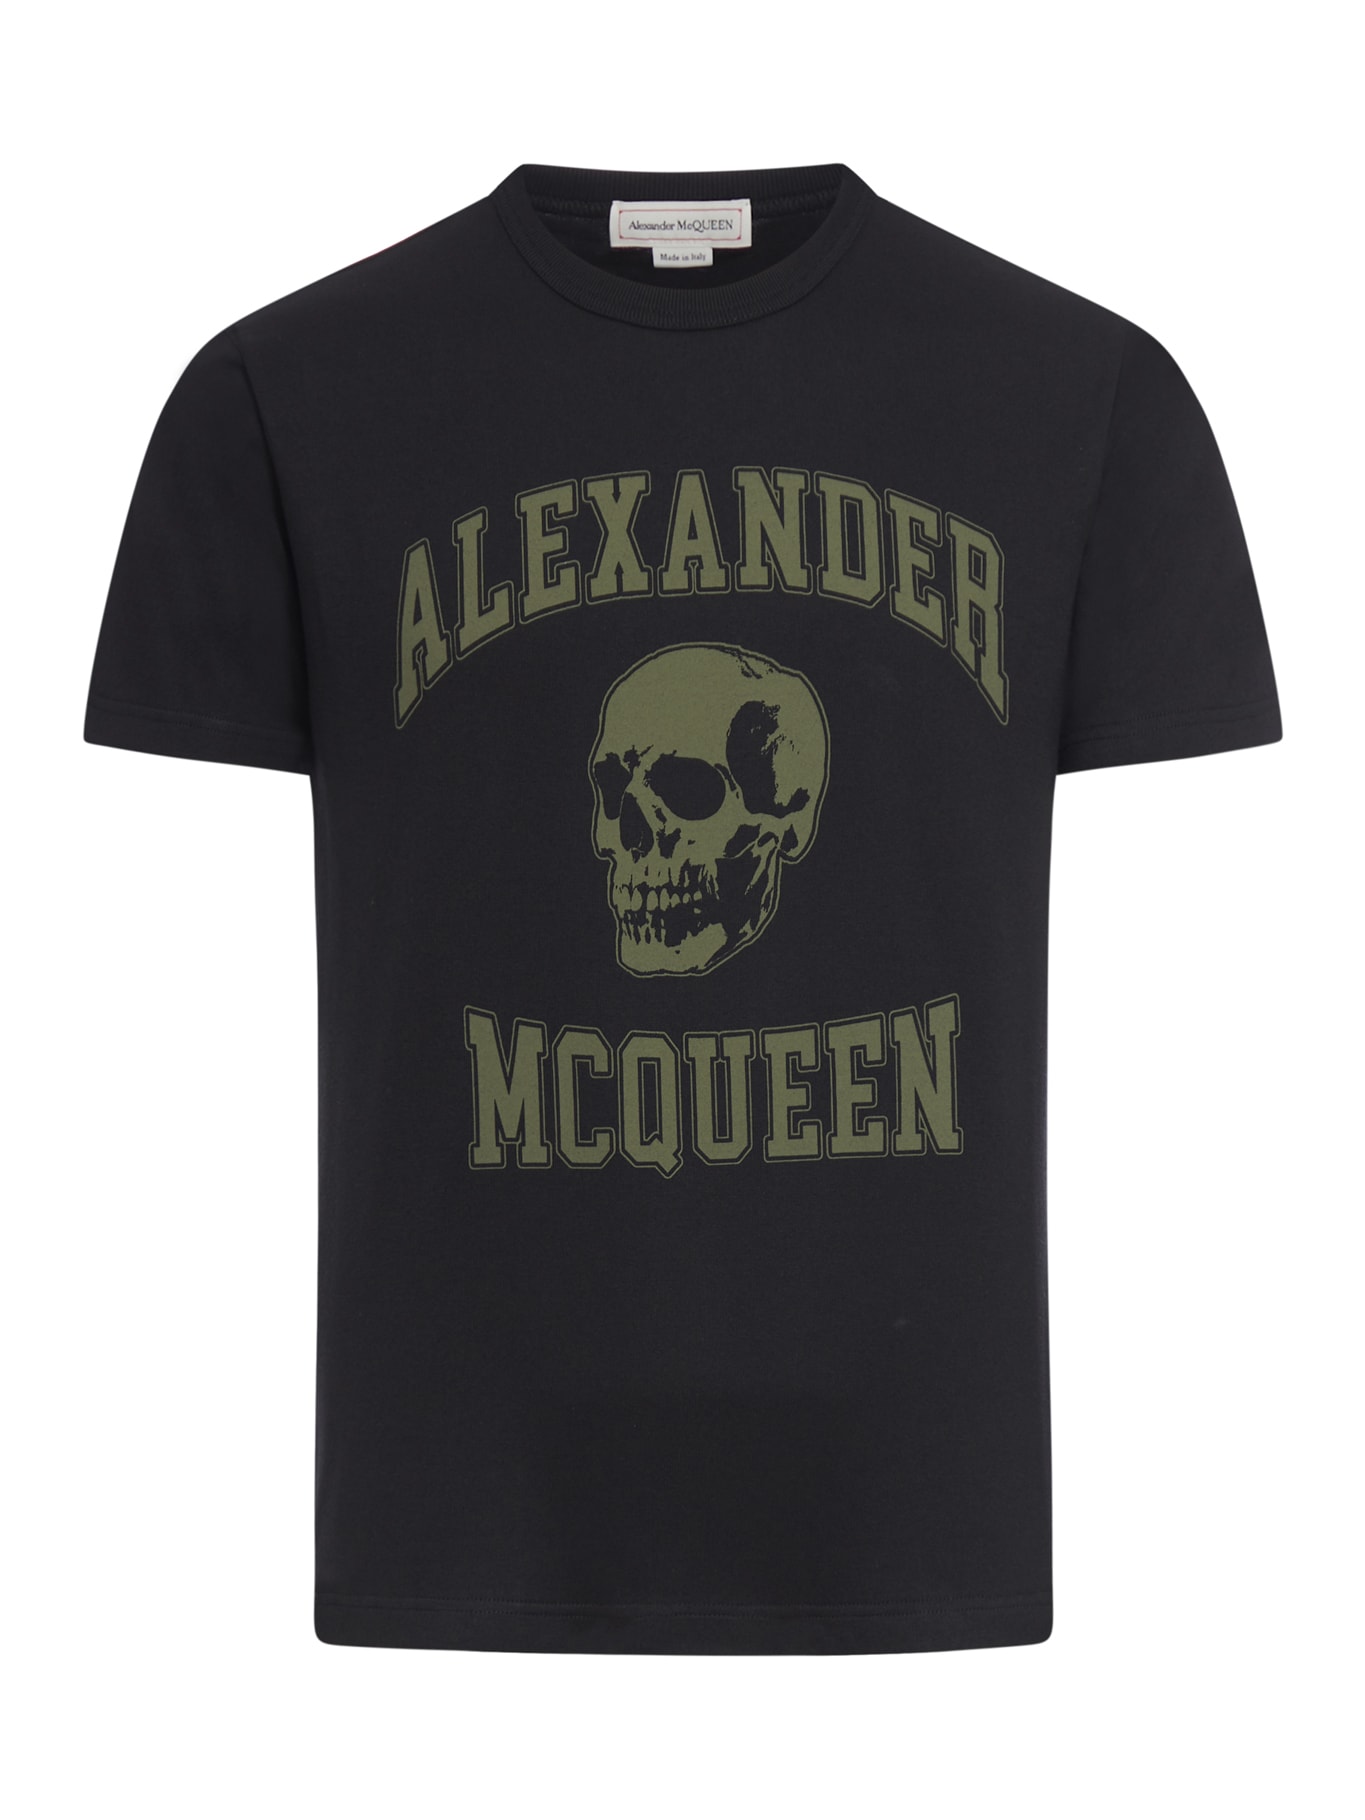 Alexander Mcqueen T-shirt In Black Khaki